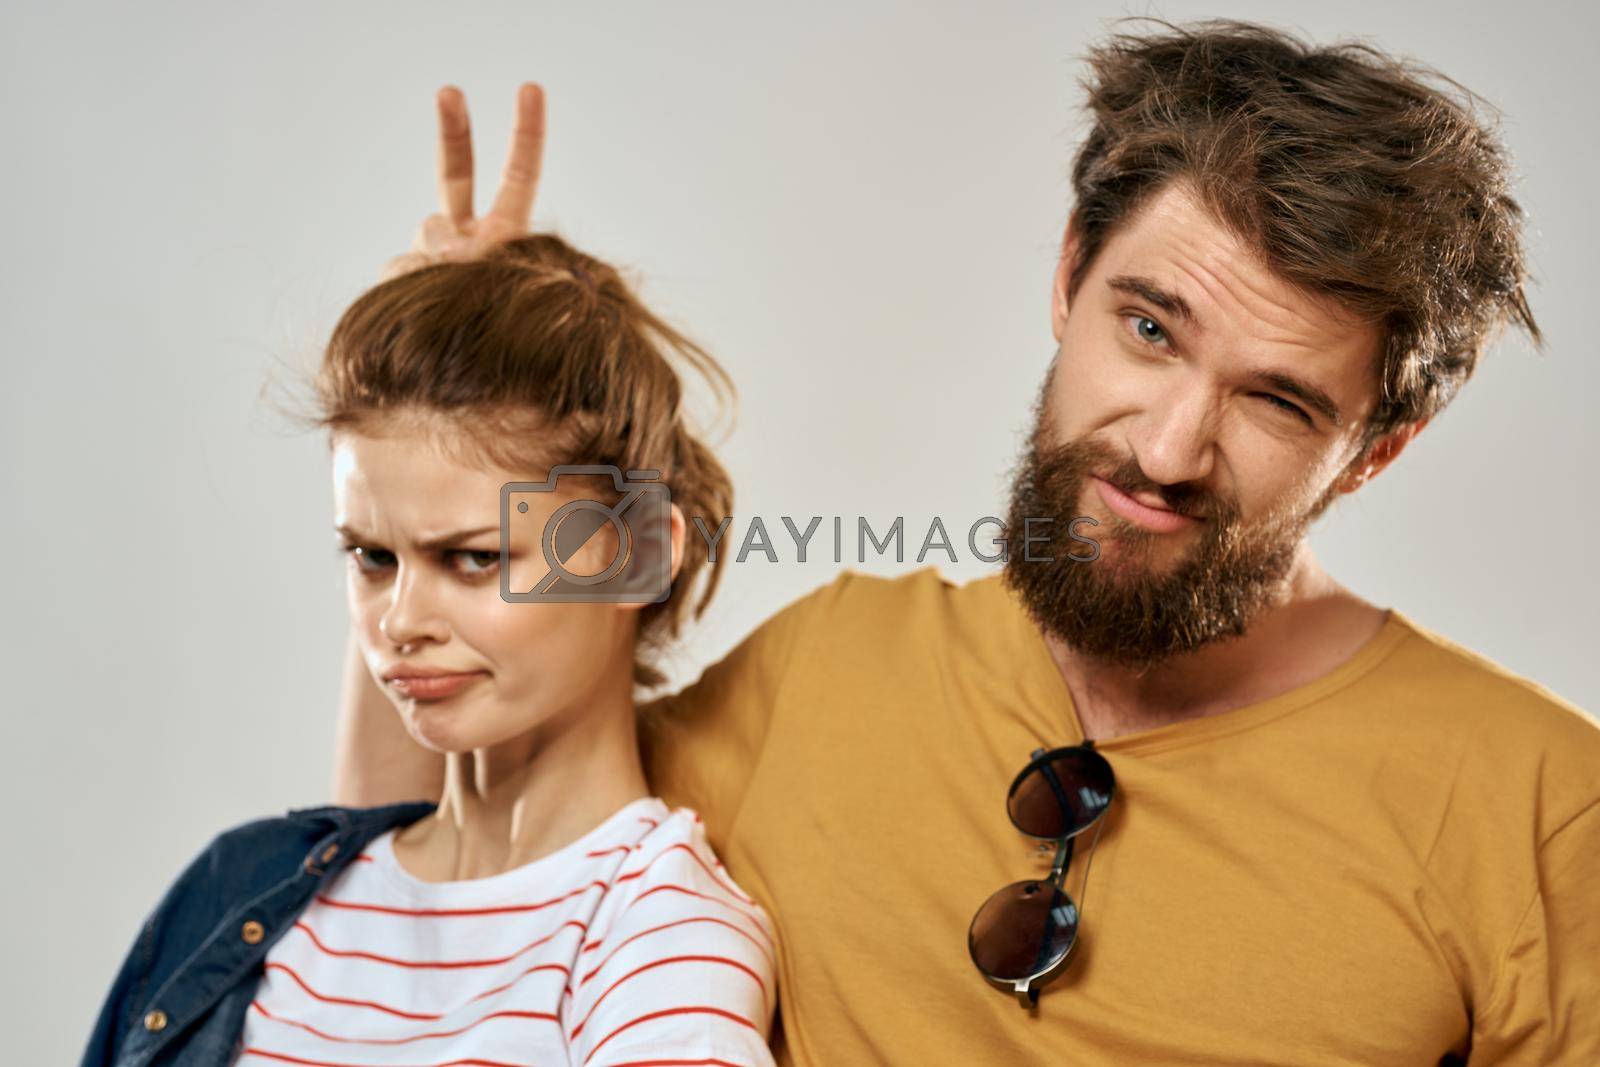 Young couple lifestyle emotions communication fashion light background. High quality photo